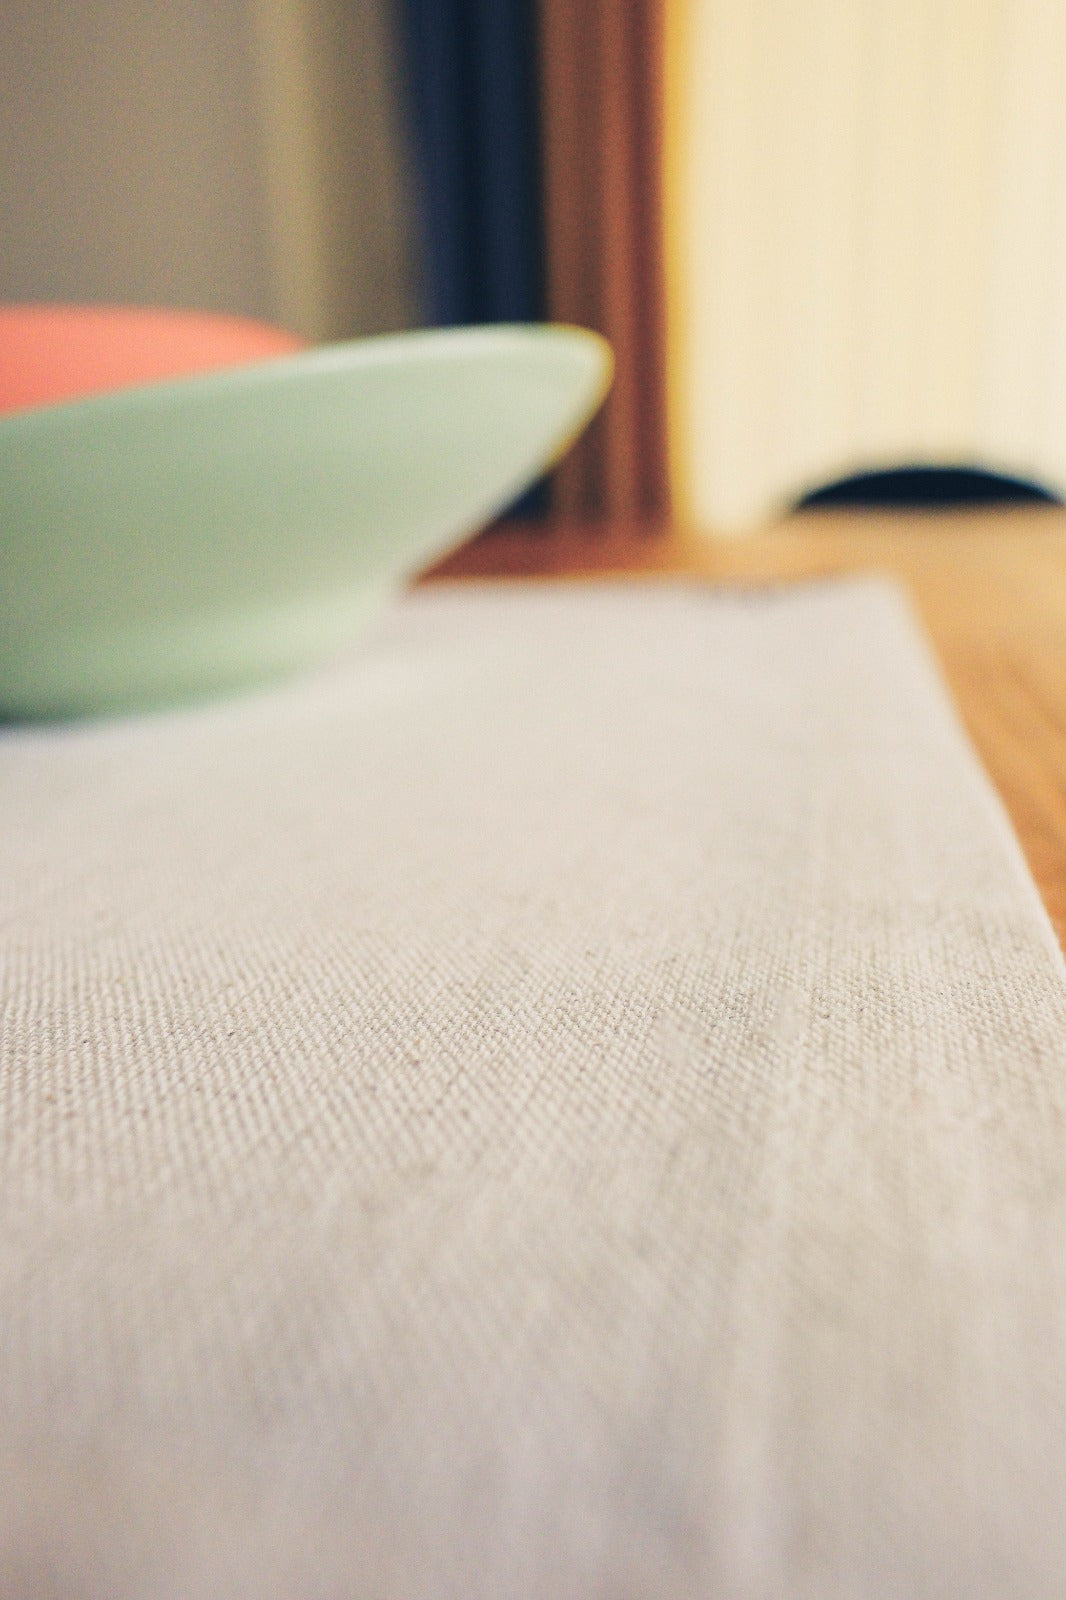 100% Cotton Plain Beige Dining Table Runner 45x150 cm 45x220 cm, Linen Look Bohemian Table Decoration